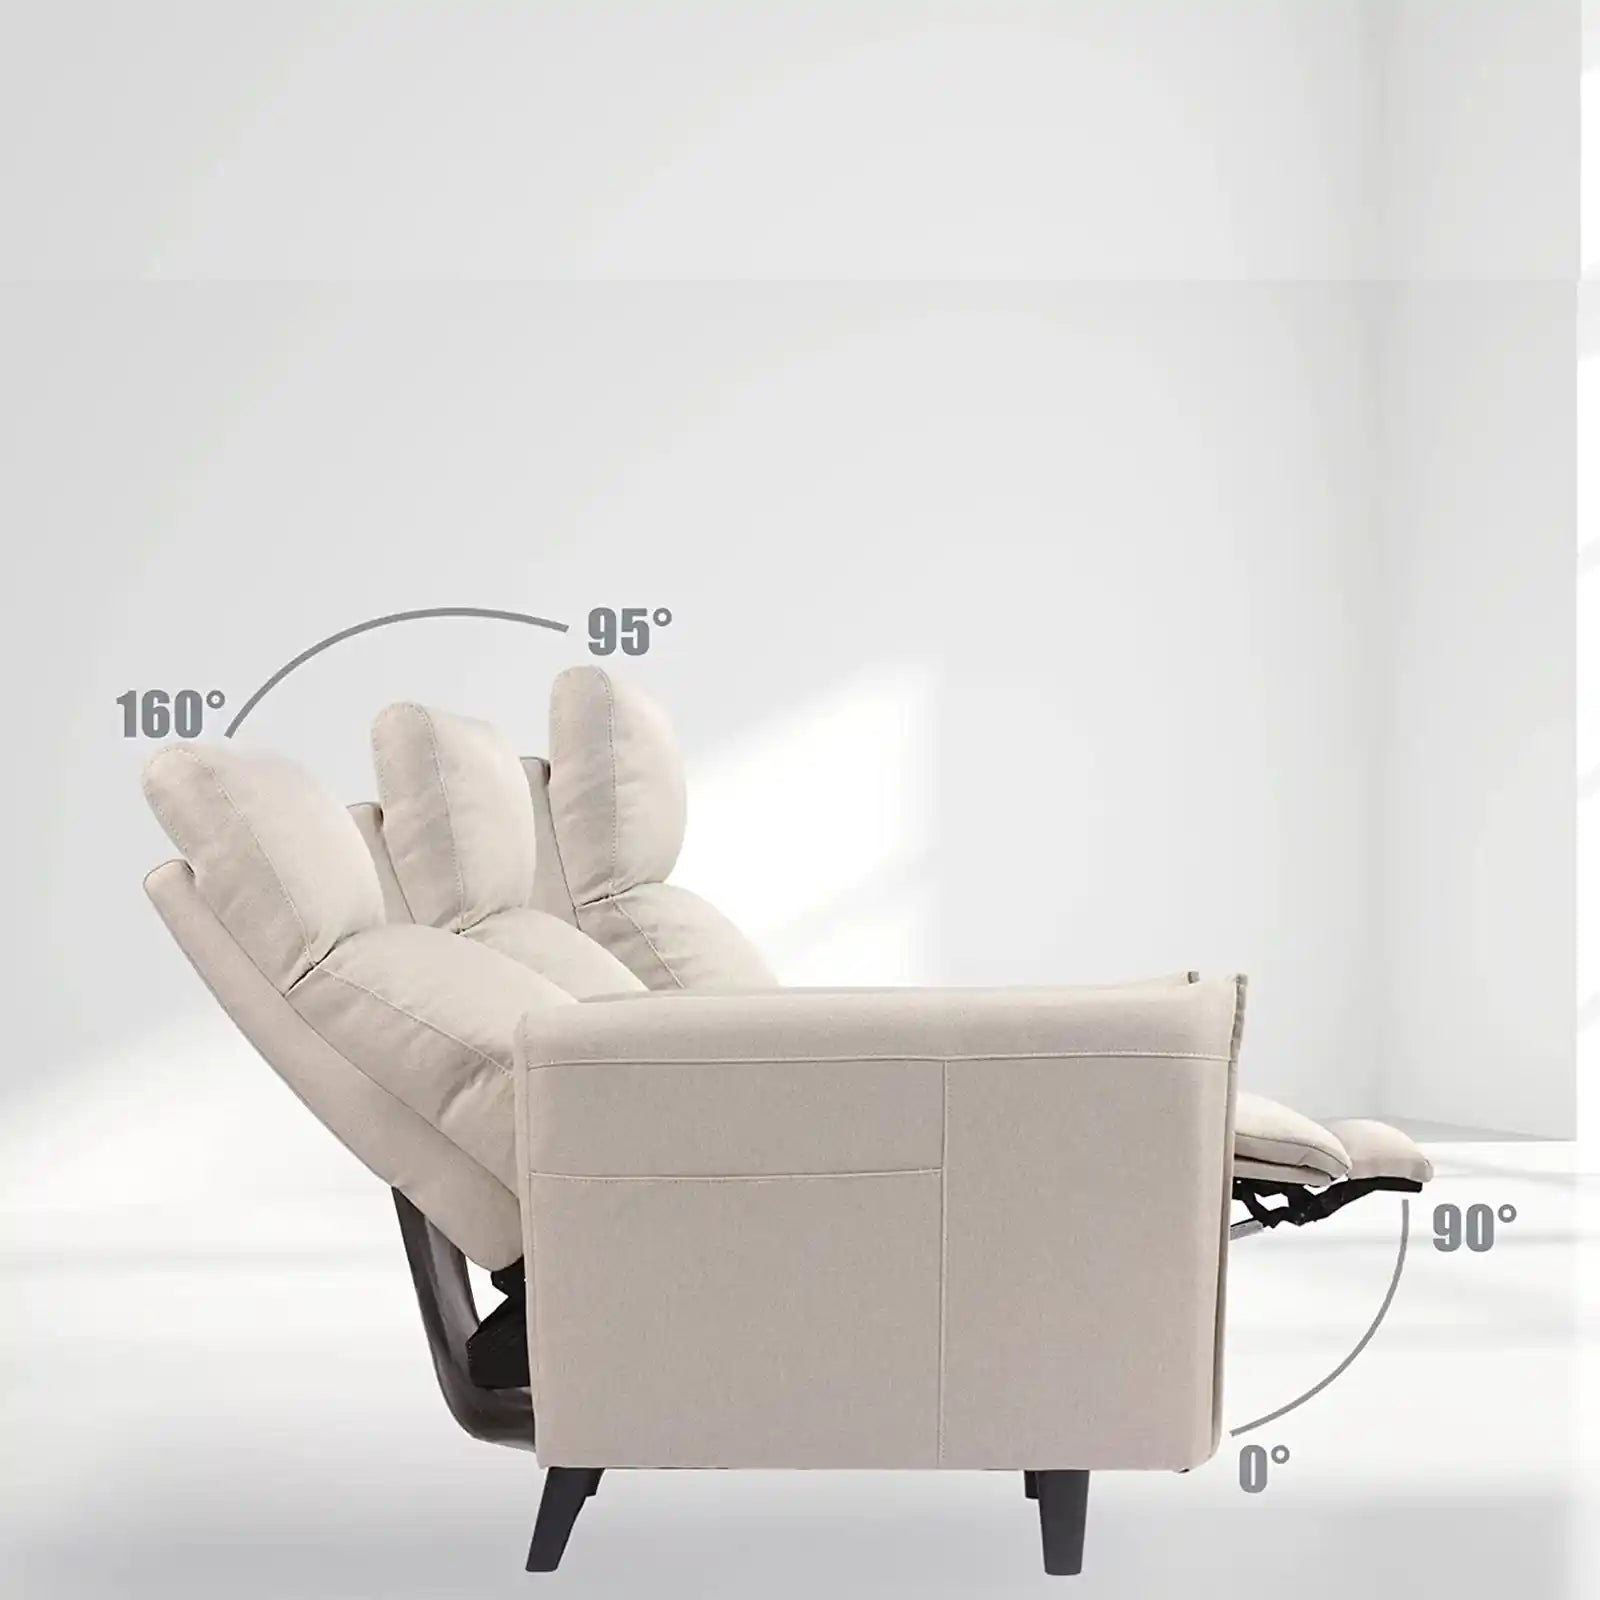 Classic Living Room Chair Medium Size Recliner Chair Recliner Sofa